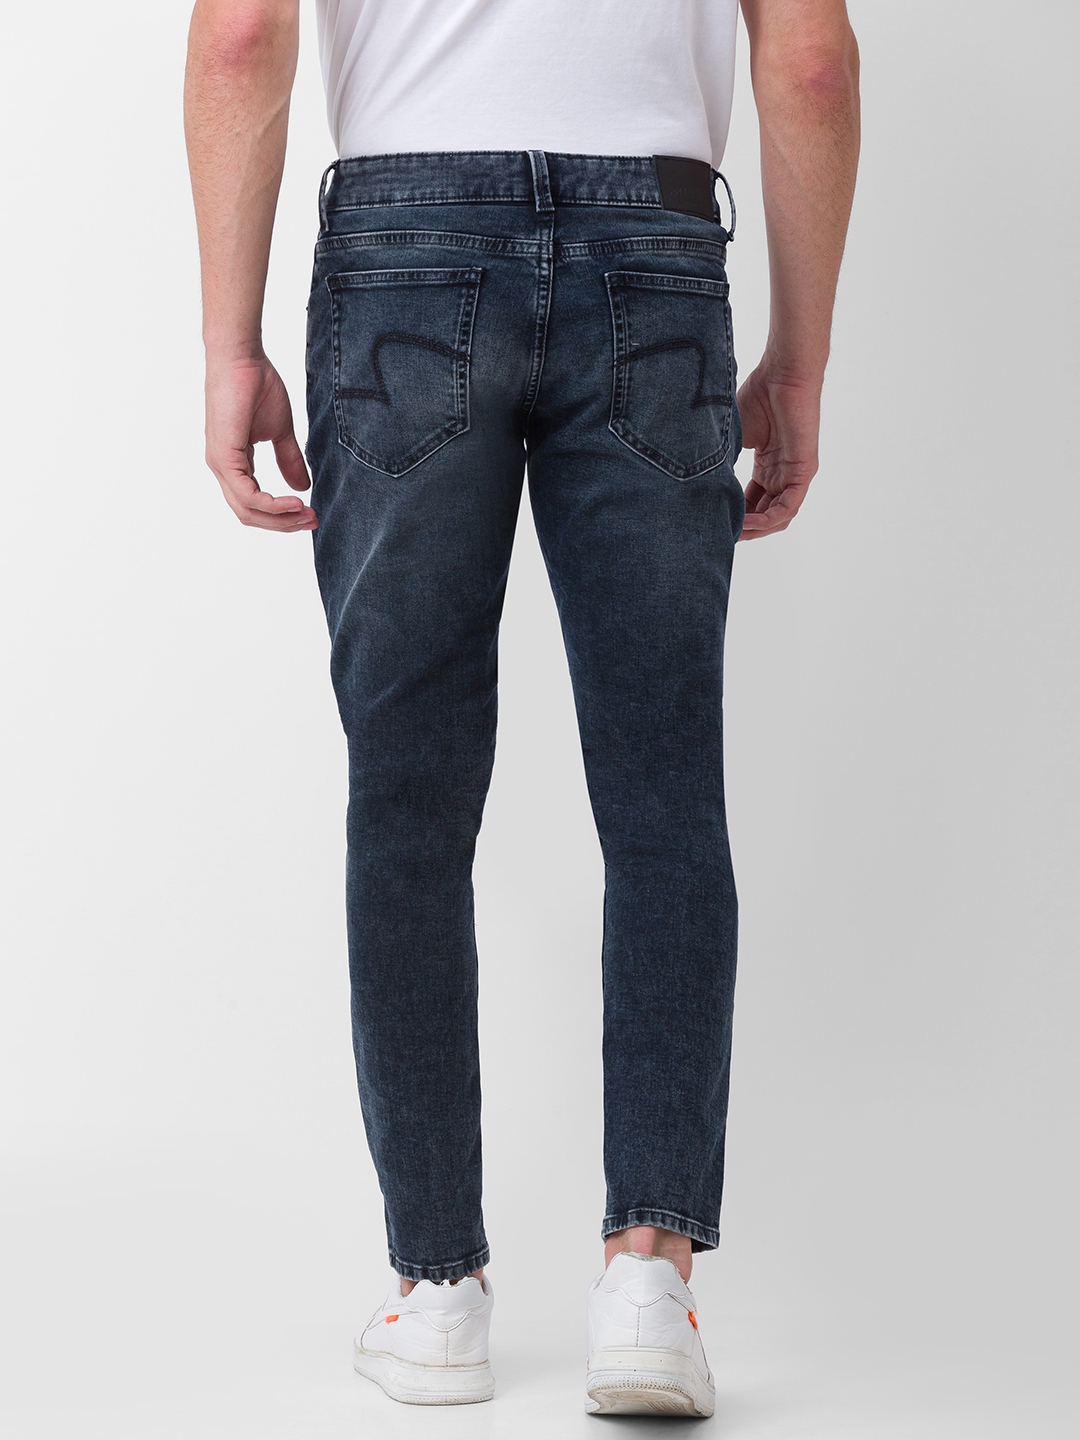 spykar | Men's Black Cotton Solid Slim Jeans 2